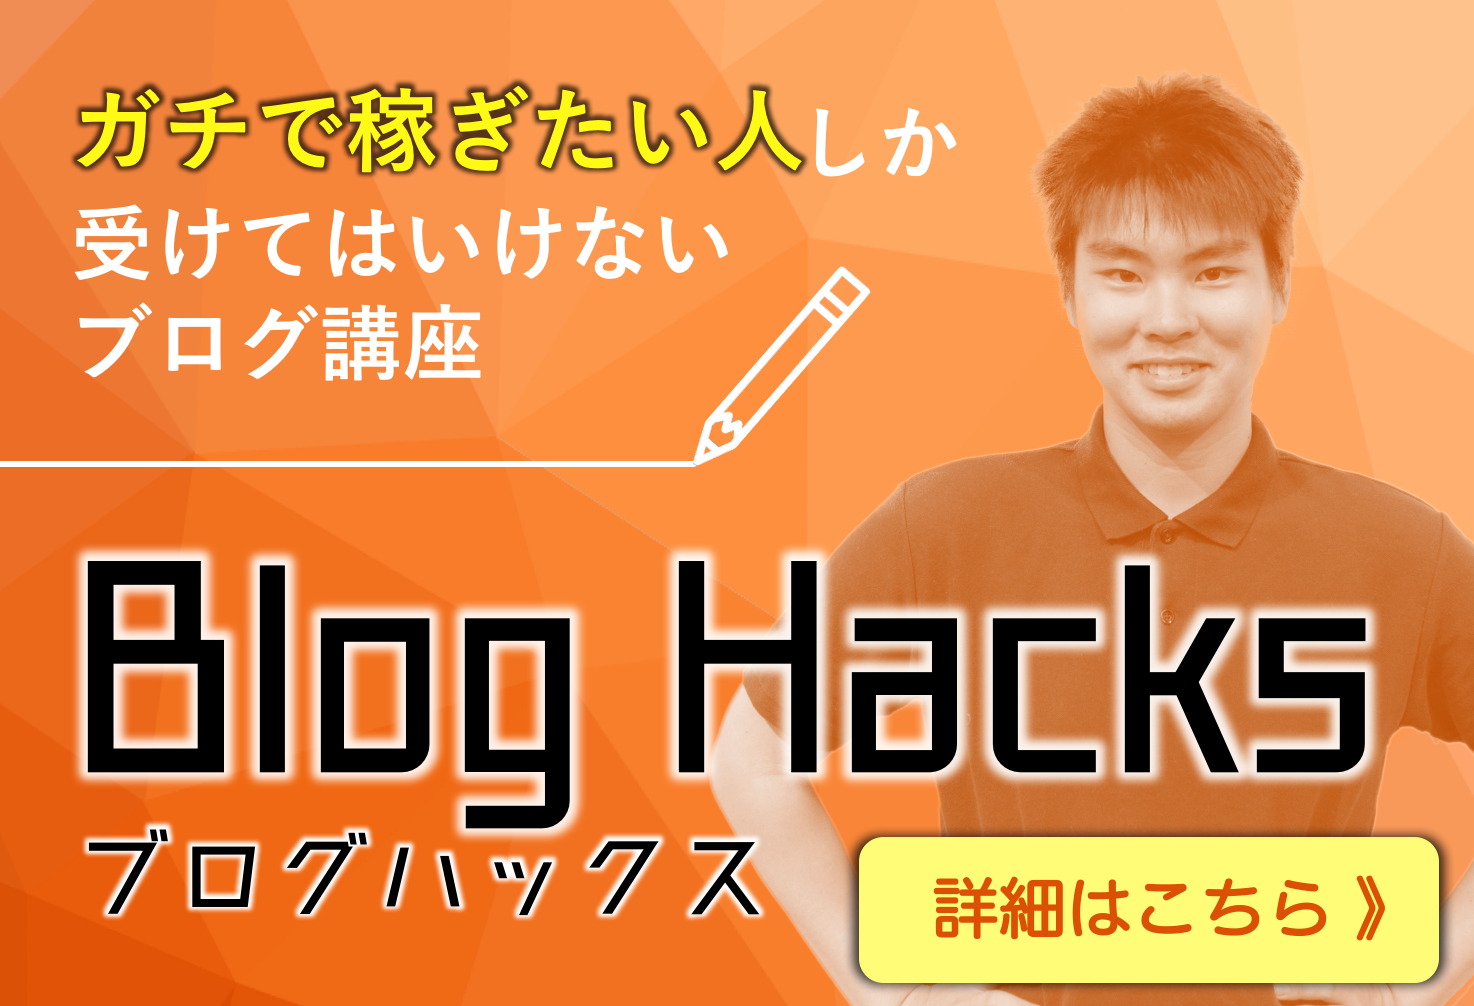 BlogHacks誘導バナー